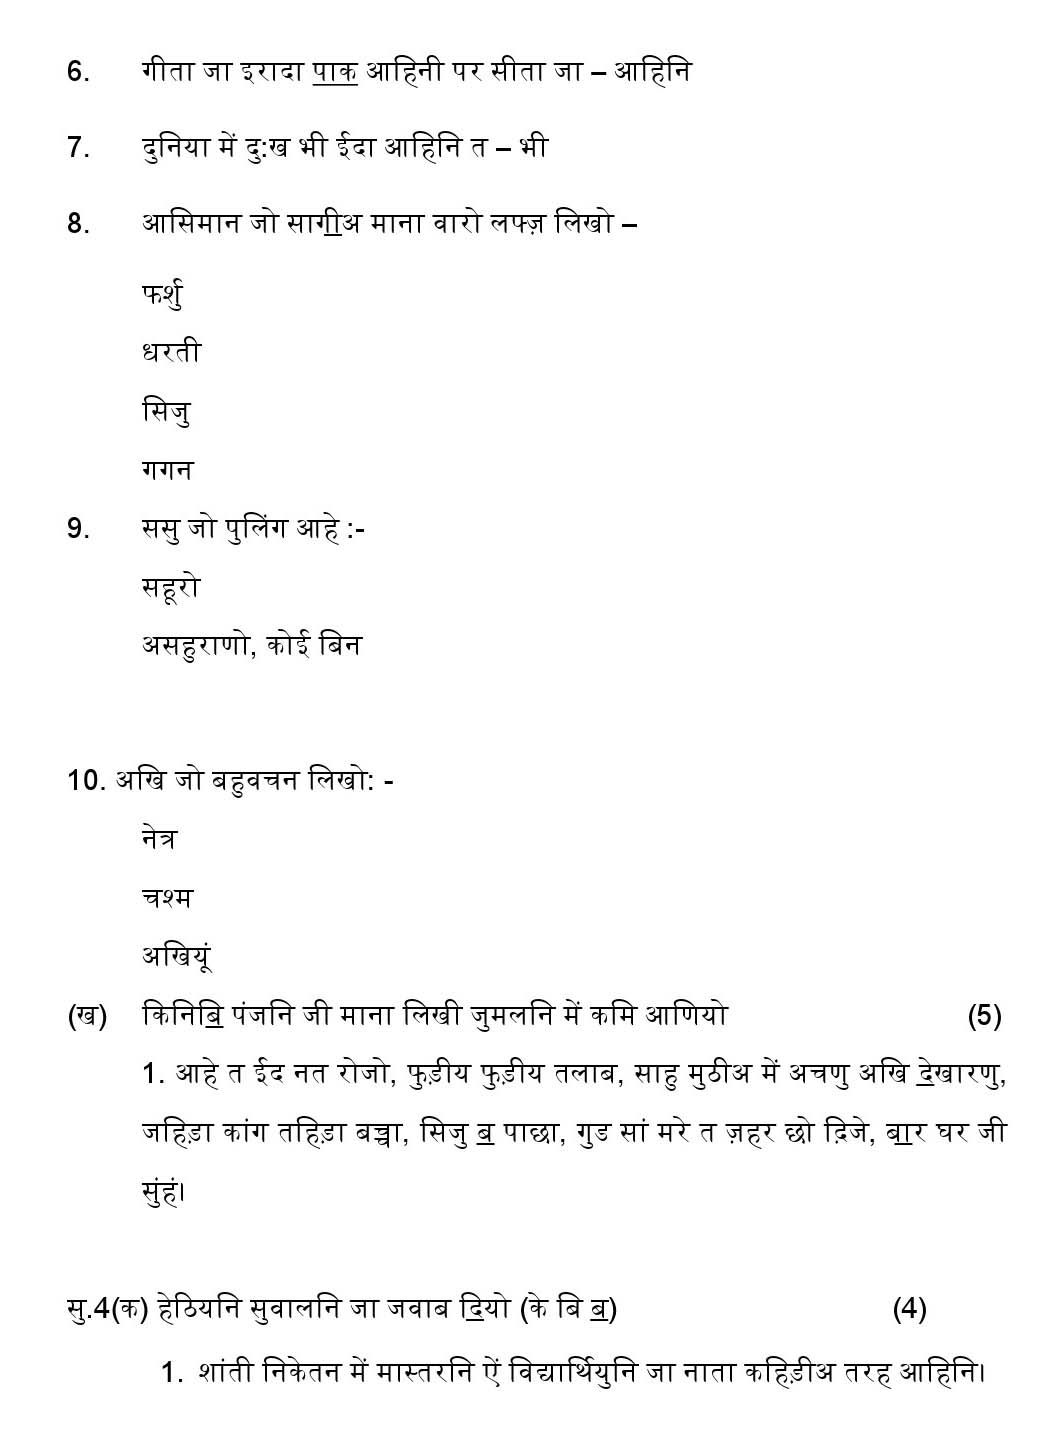 Sindhi CBSE Class X Sample Question Paper 2018-19 - Image 4